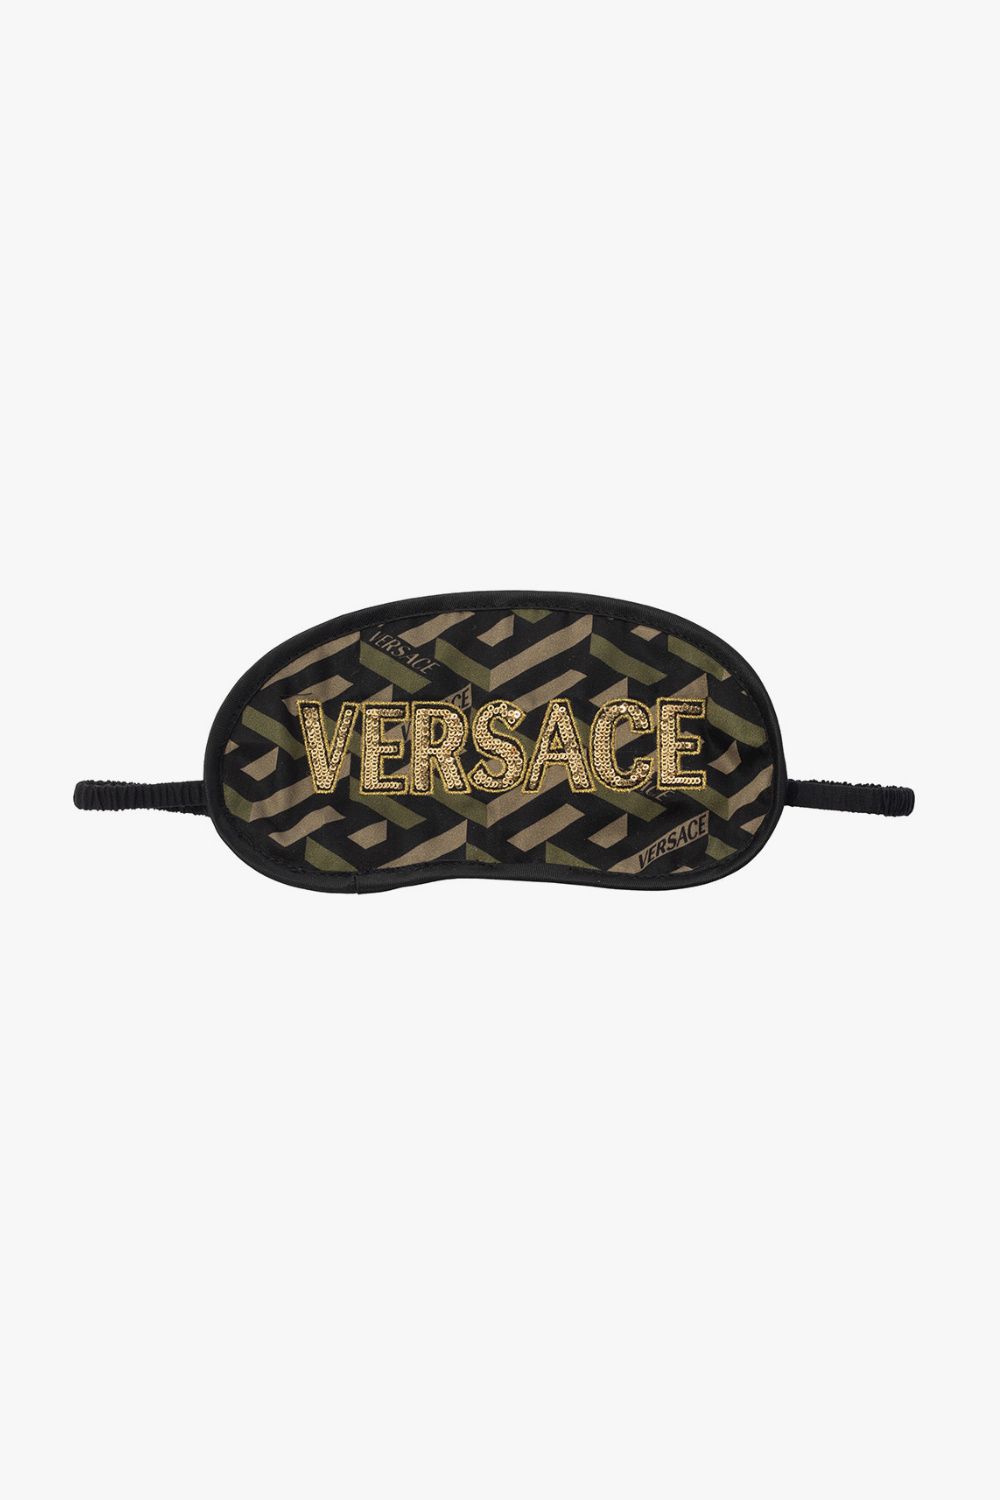 Versace Home Sleeping Energetic mask